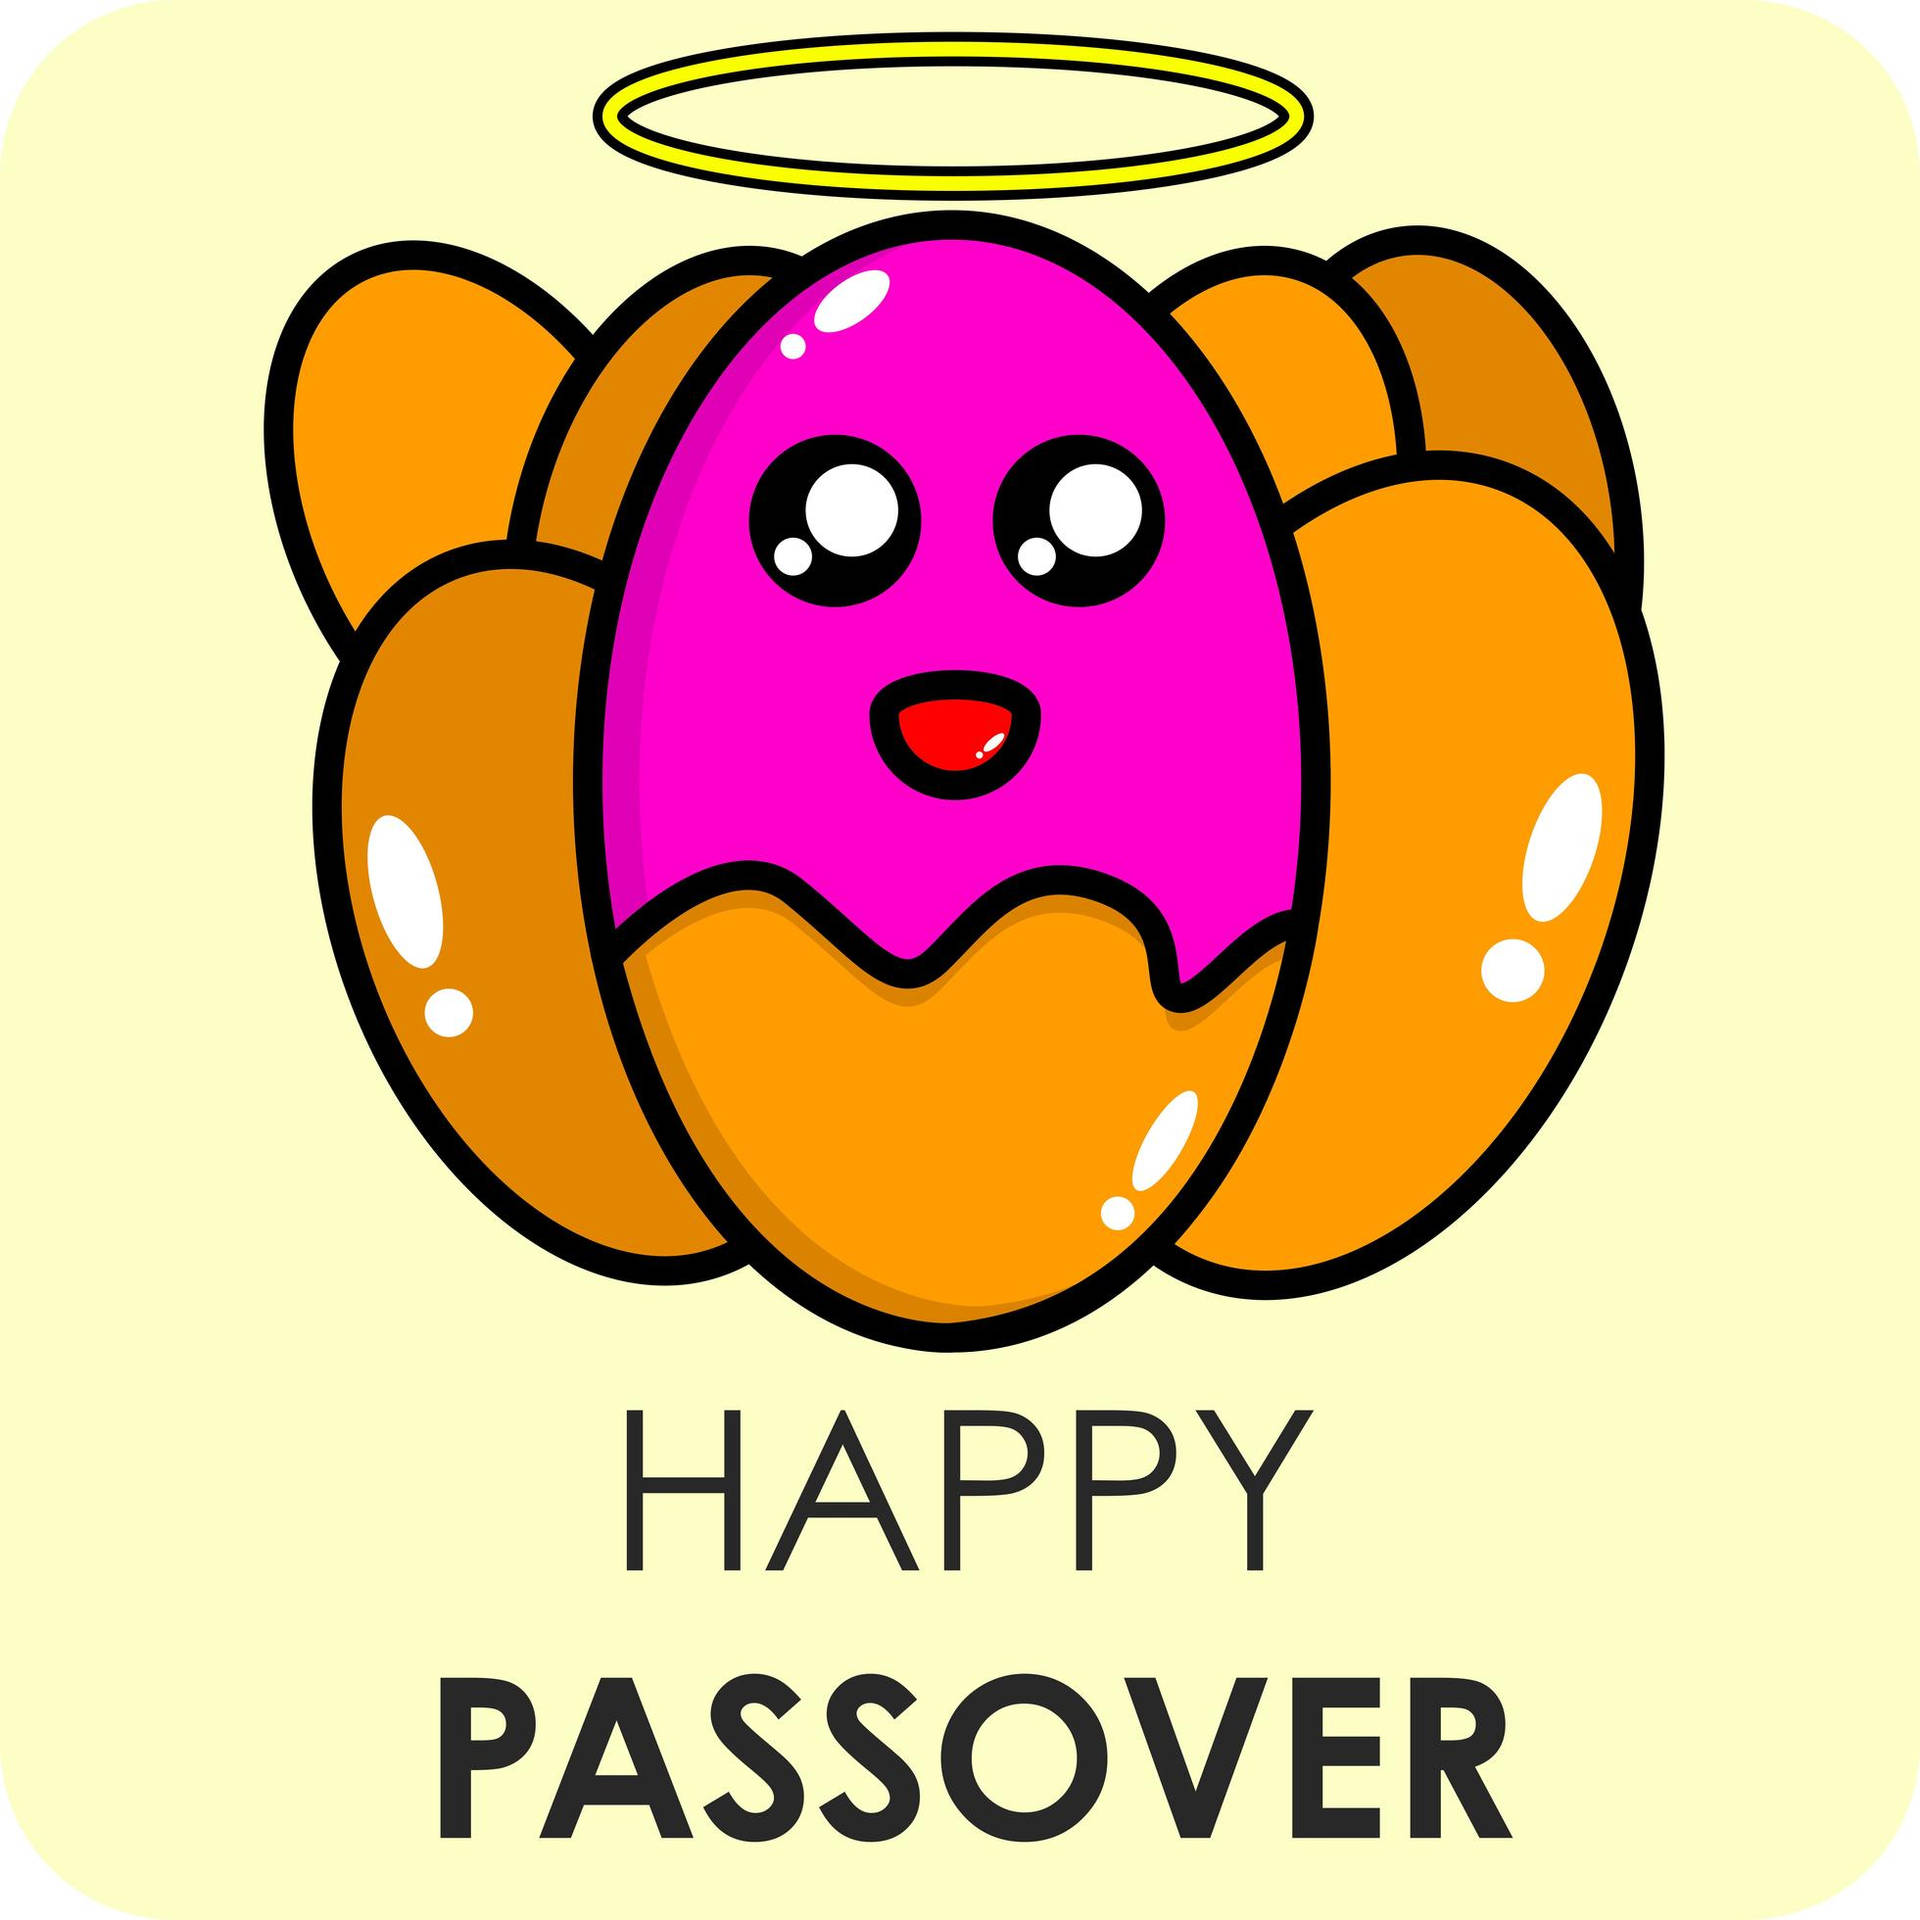 Passover Eggs Art Background